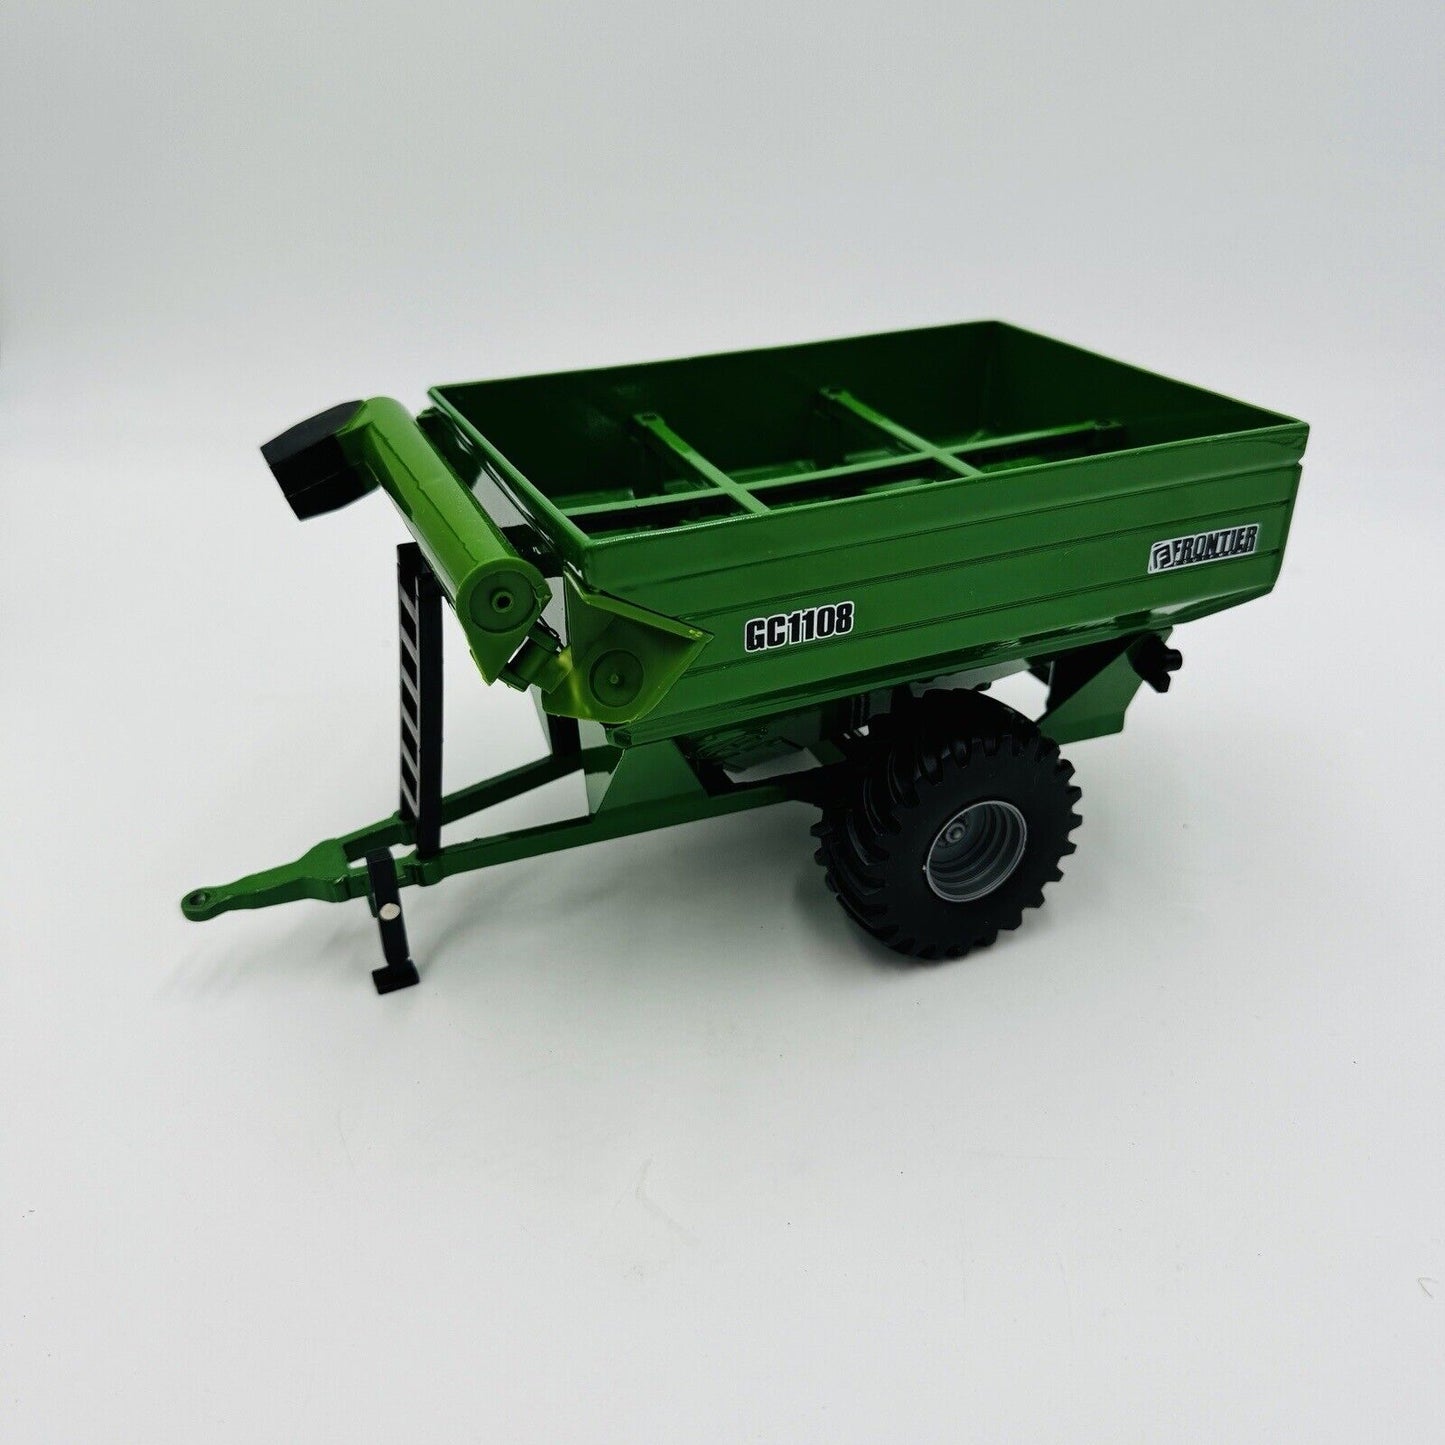 ERTL Frontier GC1108 Big Farm Series 1/64 scale Grain Cart